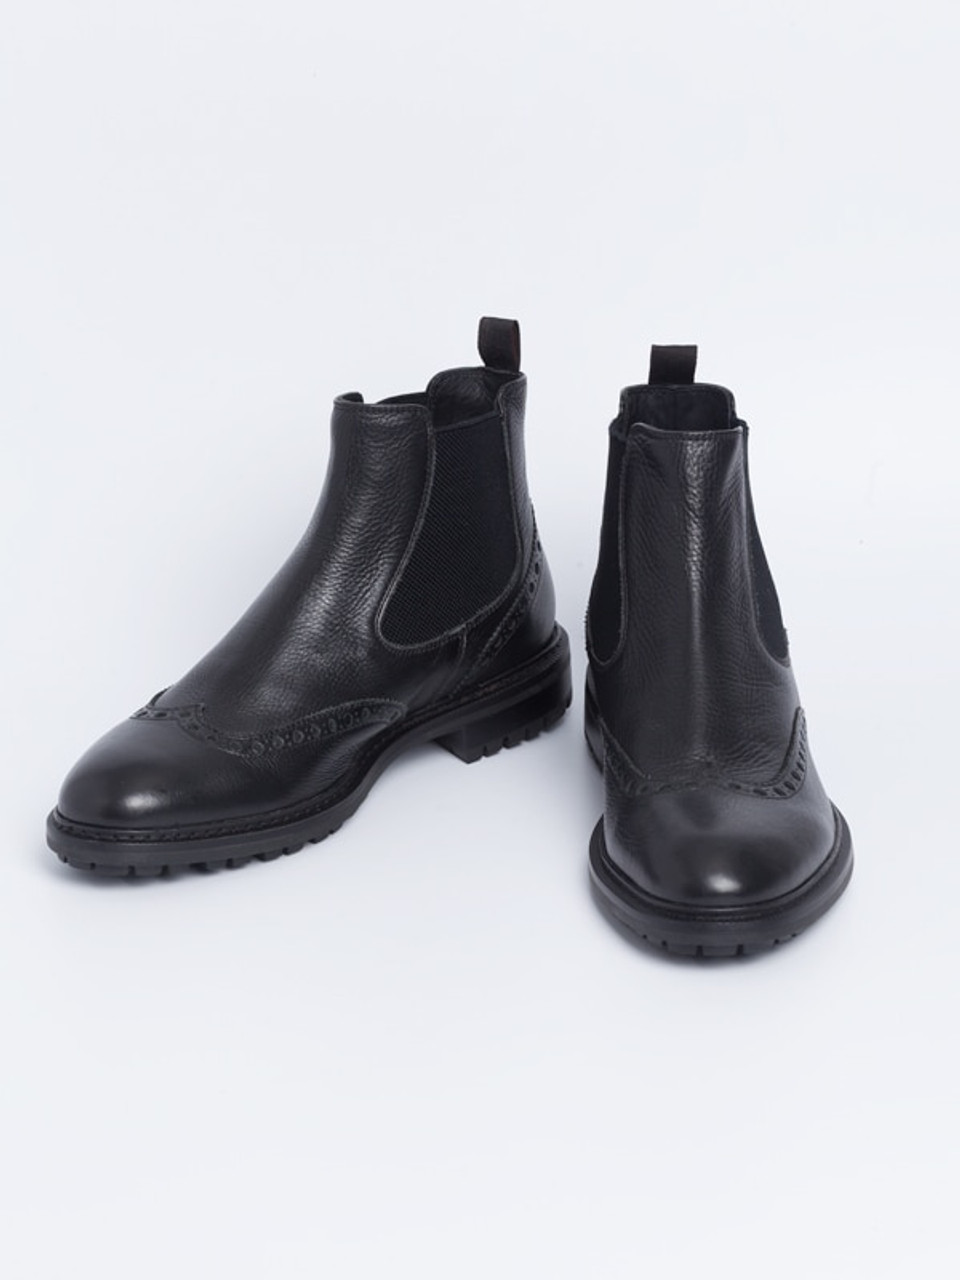 Men's Black Geox Brenson Chelsea Boots| Peter